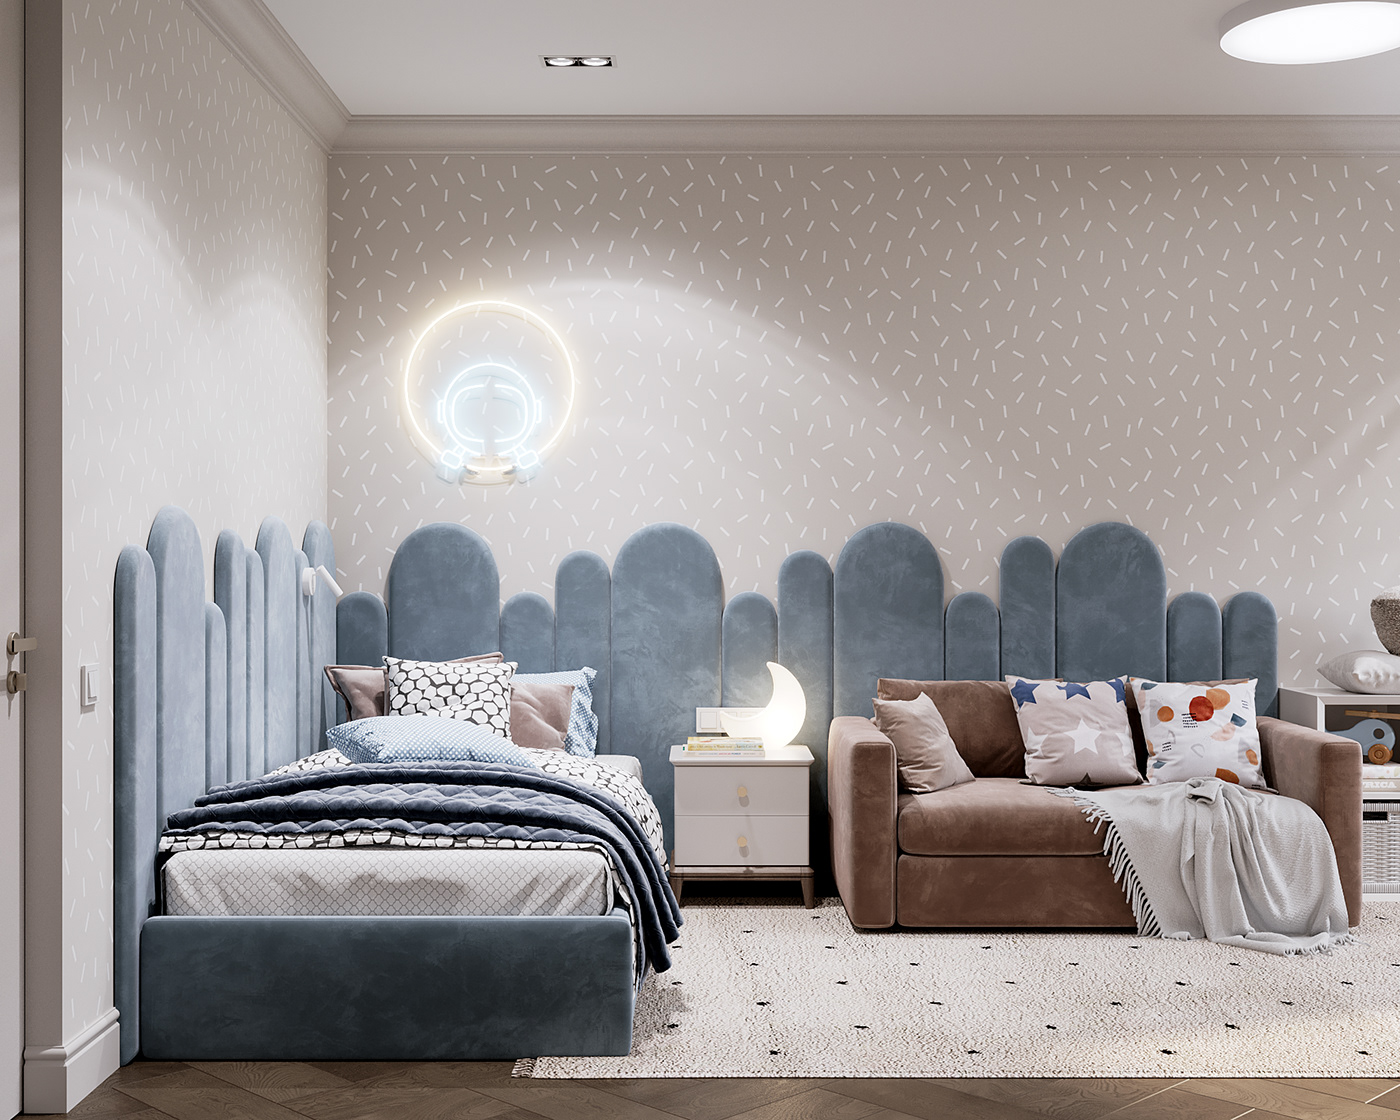 3D 3ds max 3д визуализация archviz corona interior design  Render visualization дизайн